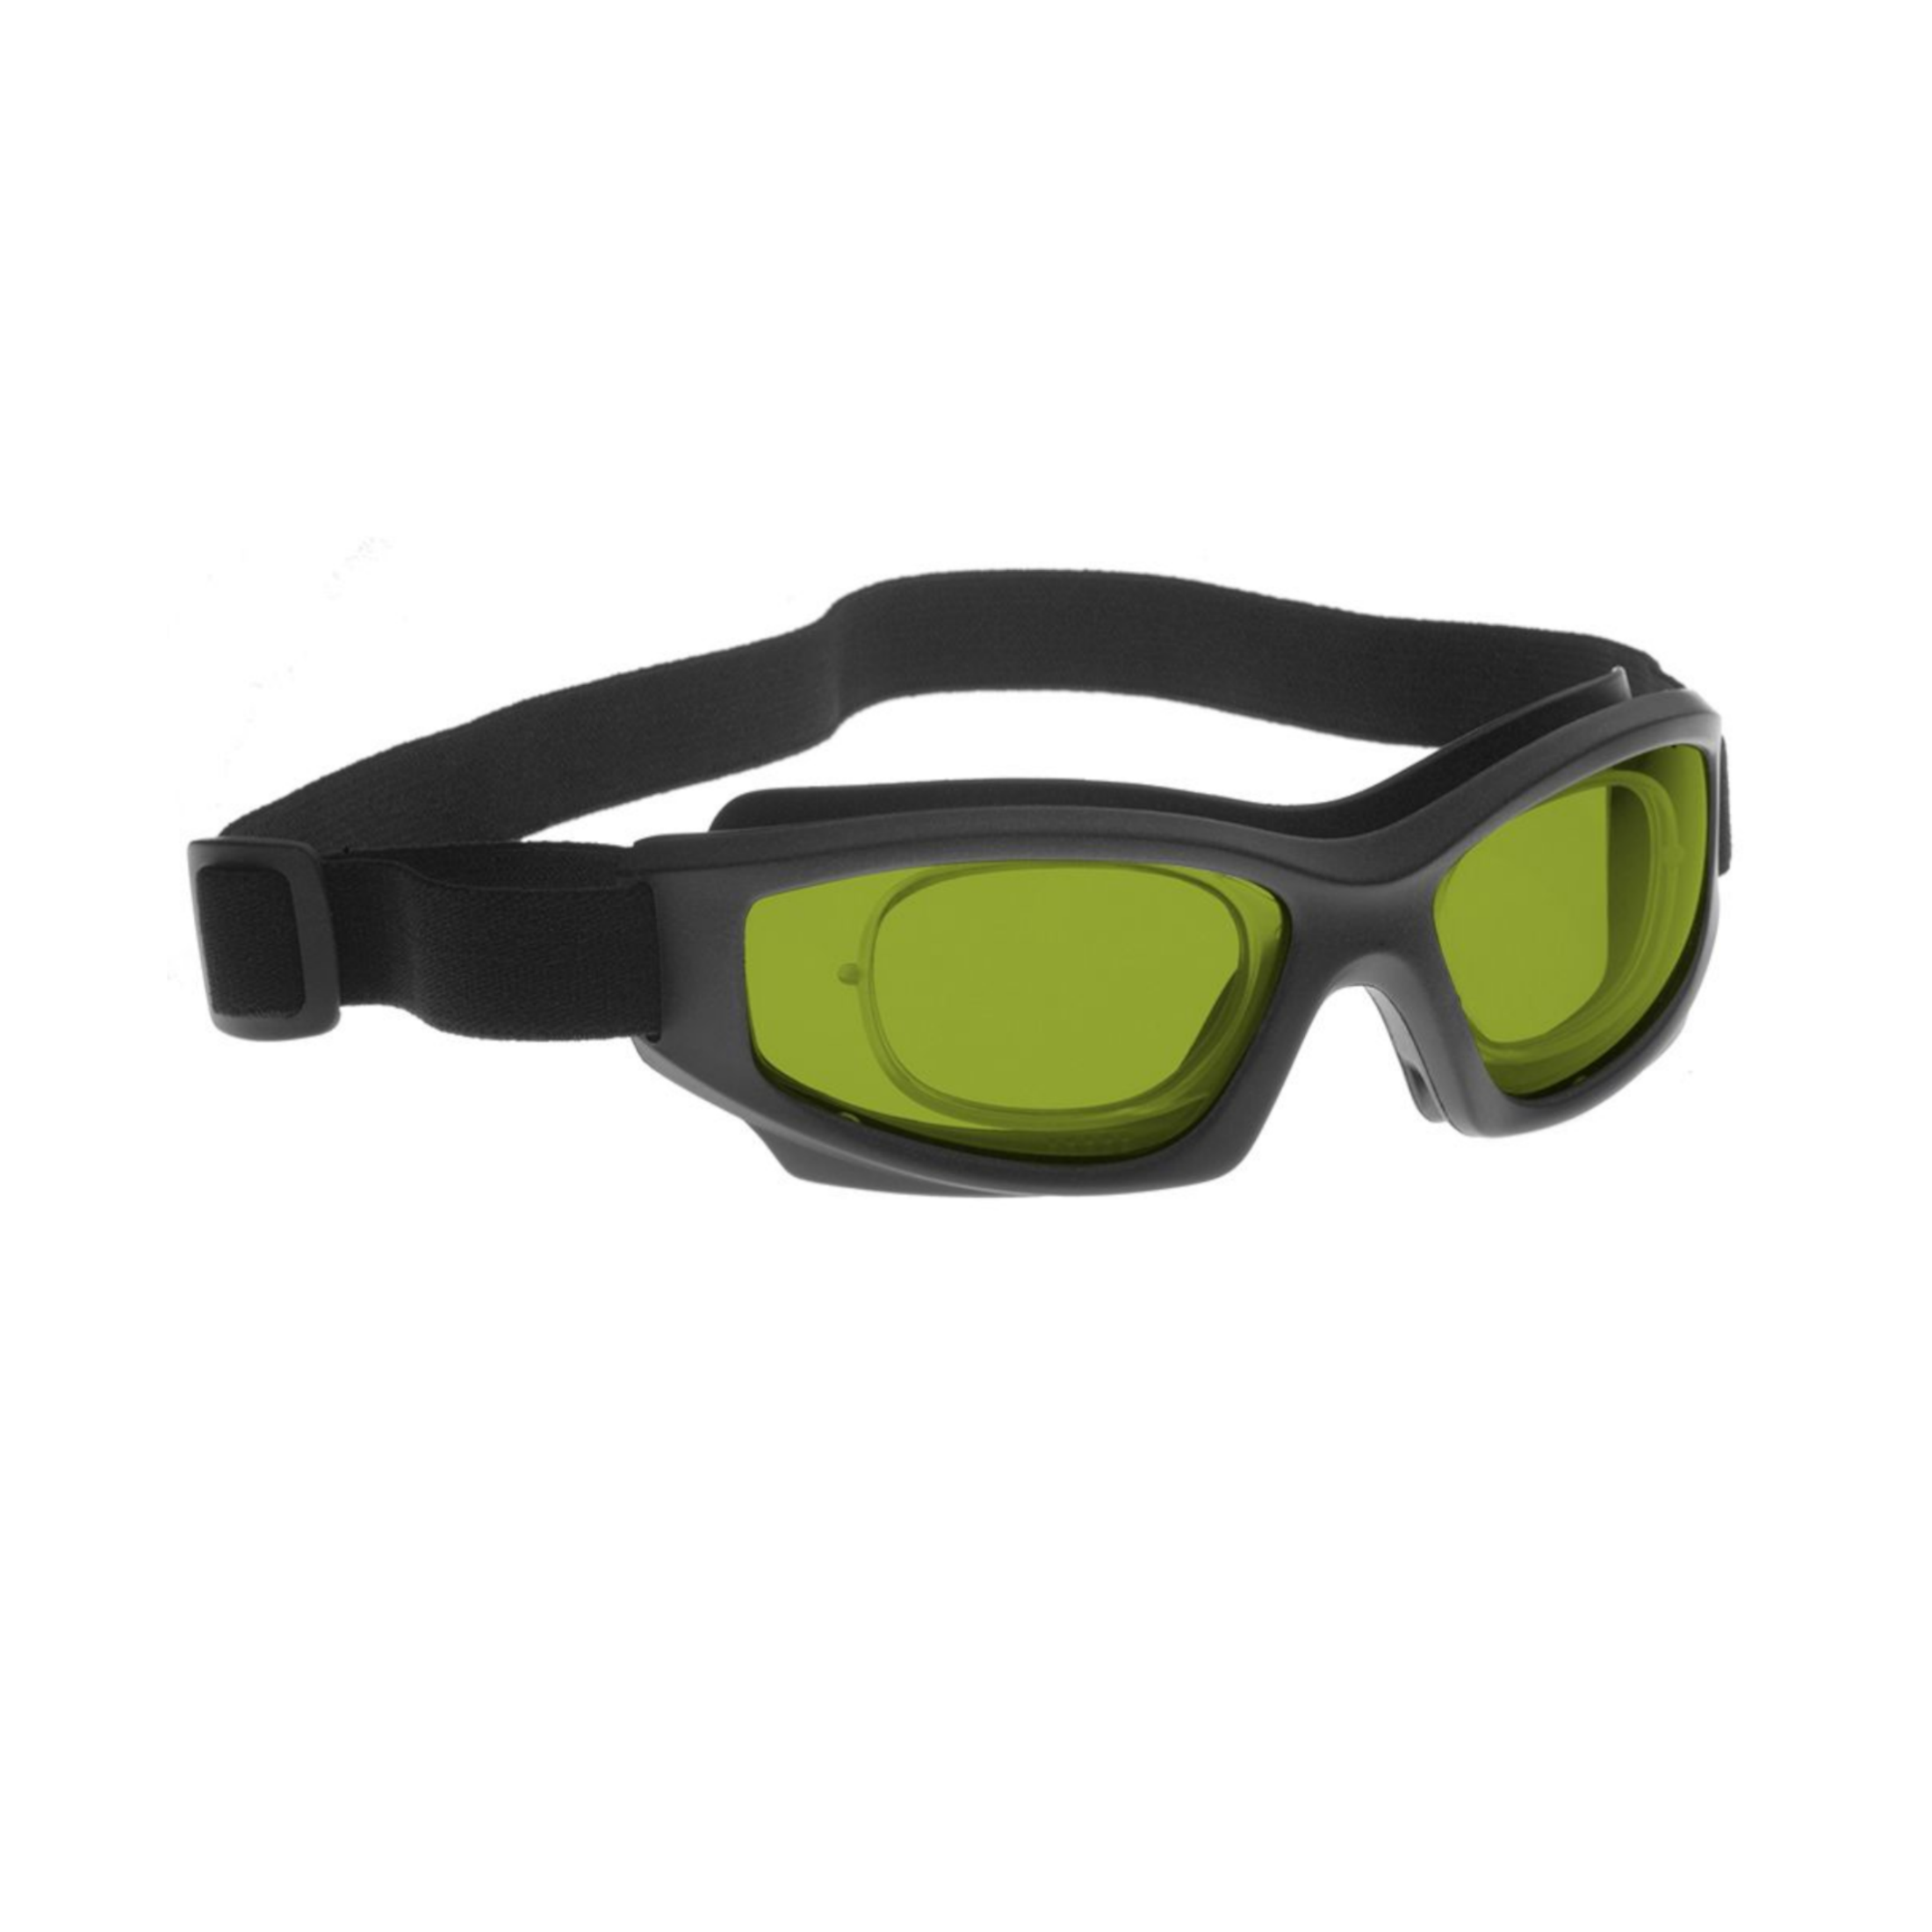 certified Laser Safety Eyewear PICO-LPG-780-1064 according to DIN EN 207, suitable for infrared wav…